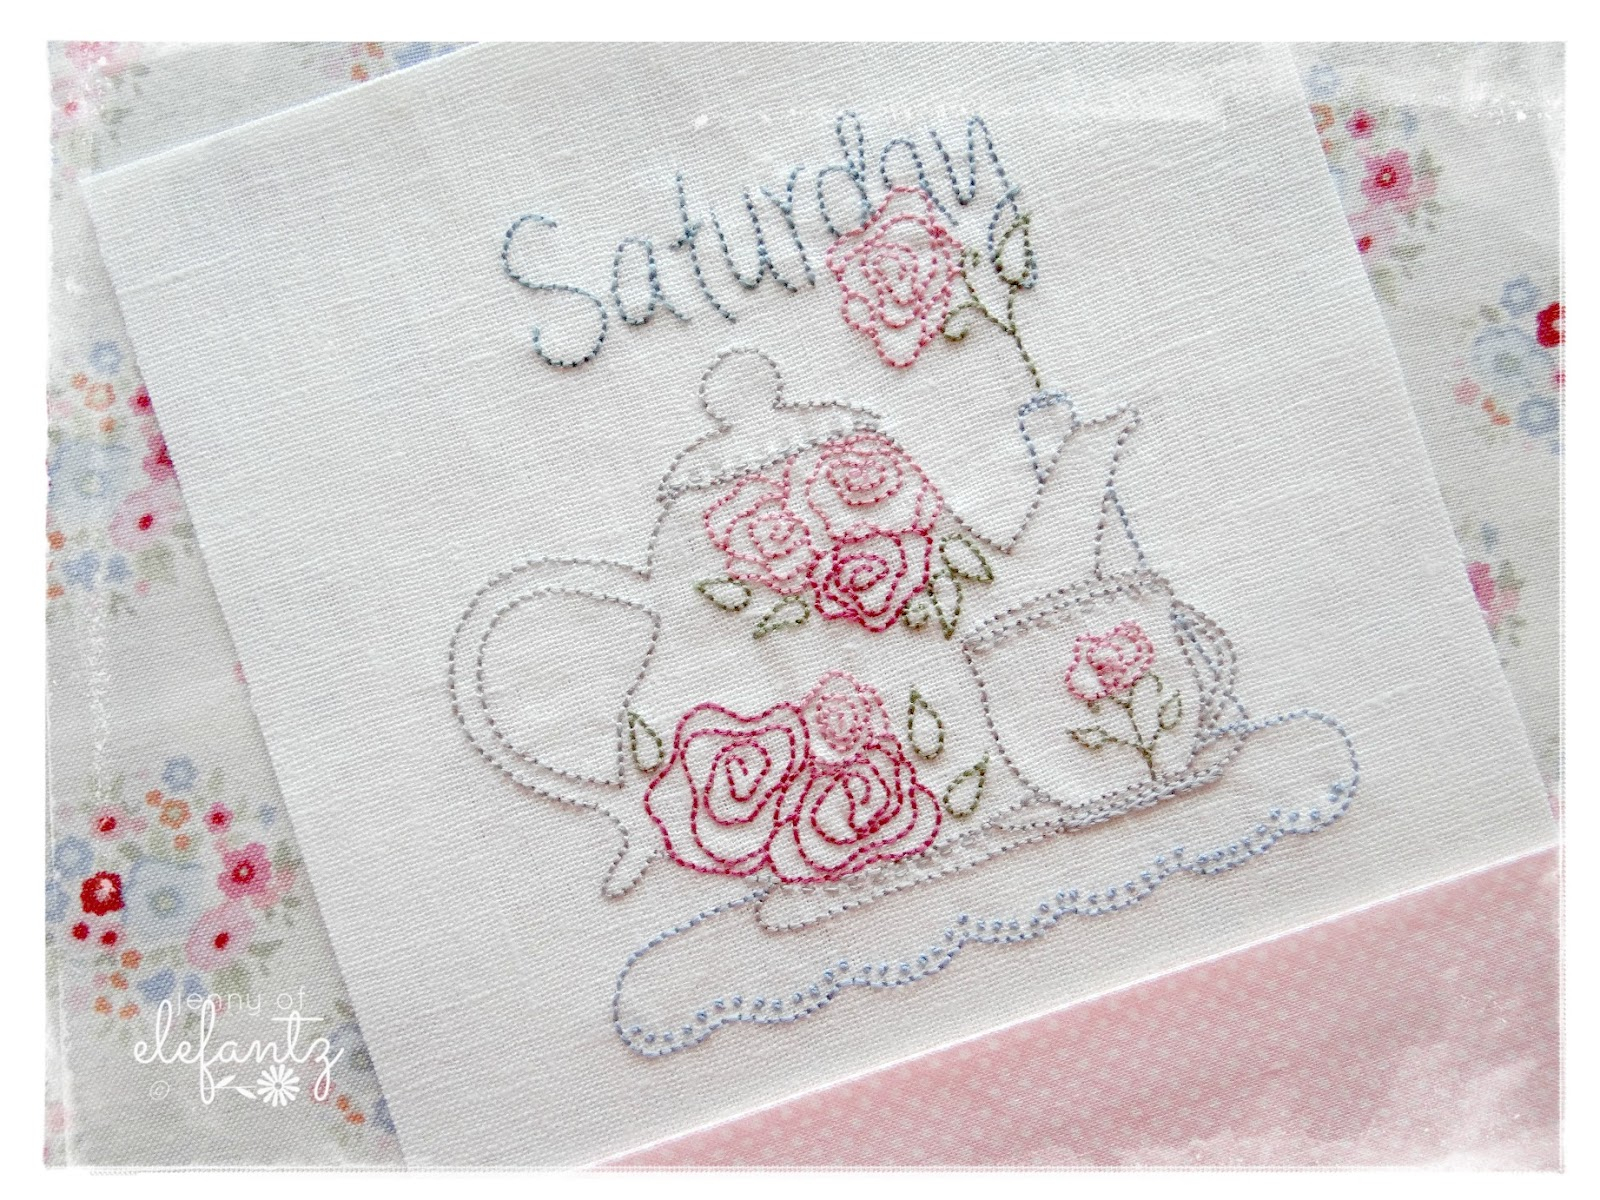 Free Hand Embroidery Patterns For Tea Towels Jenny Of Elefantz April 2016